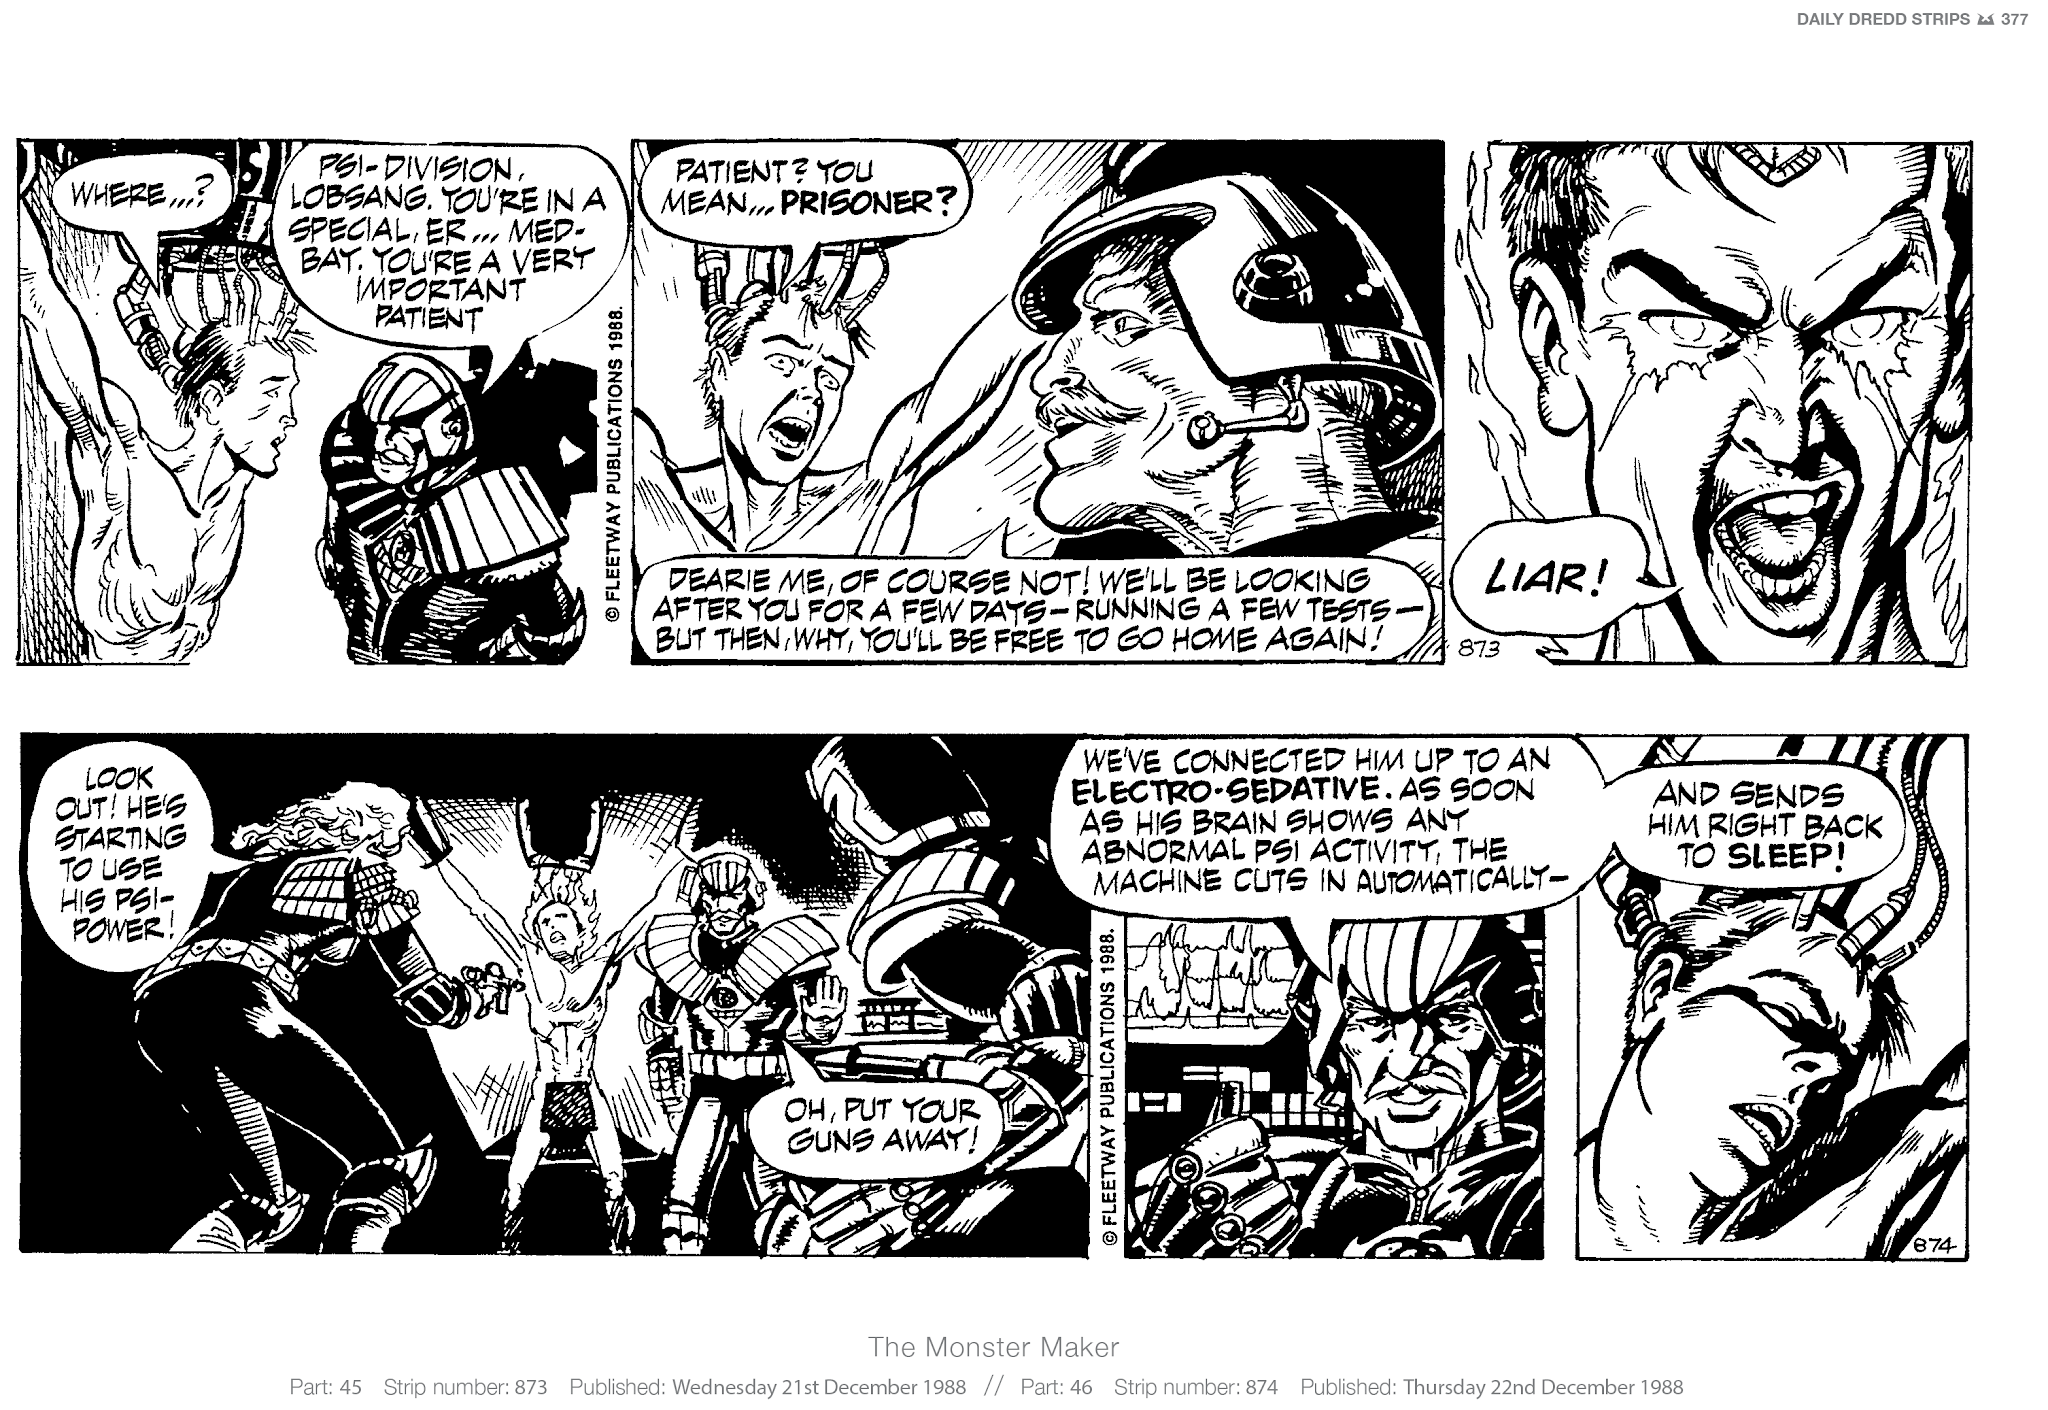 Read online Judge Dredd: The Daily Dredds comic -  Issue # TPB 2 - 380